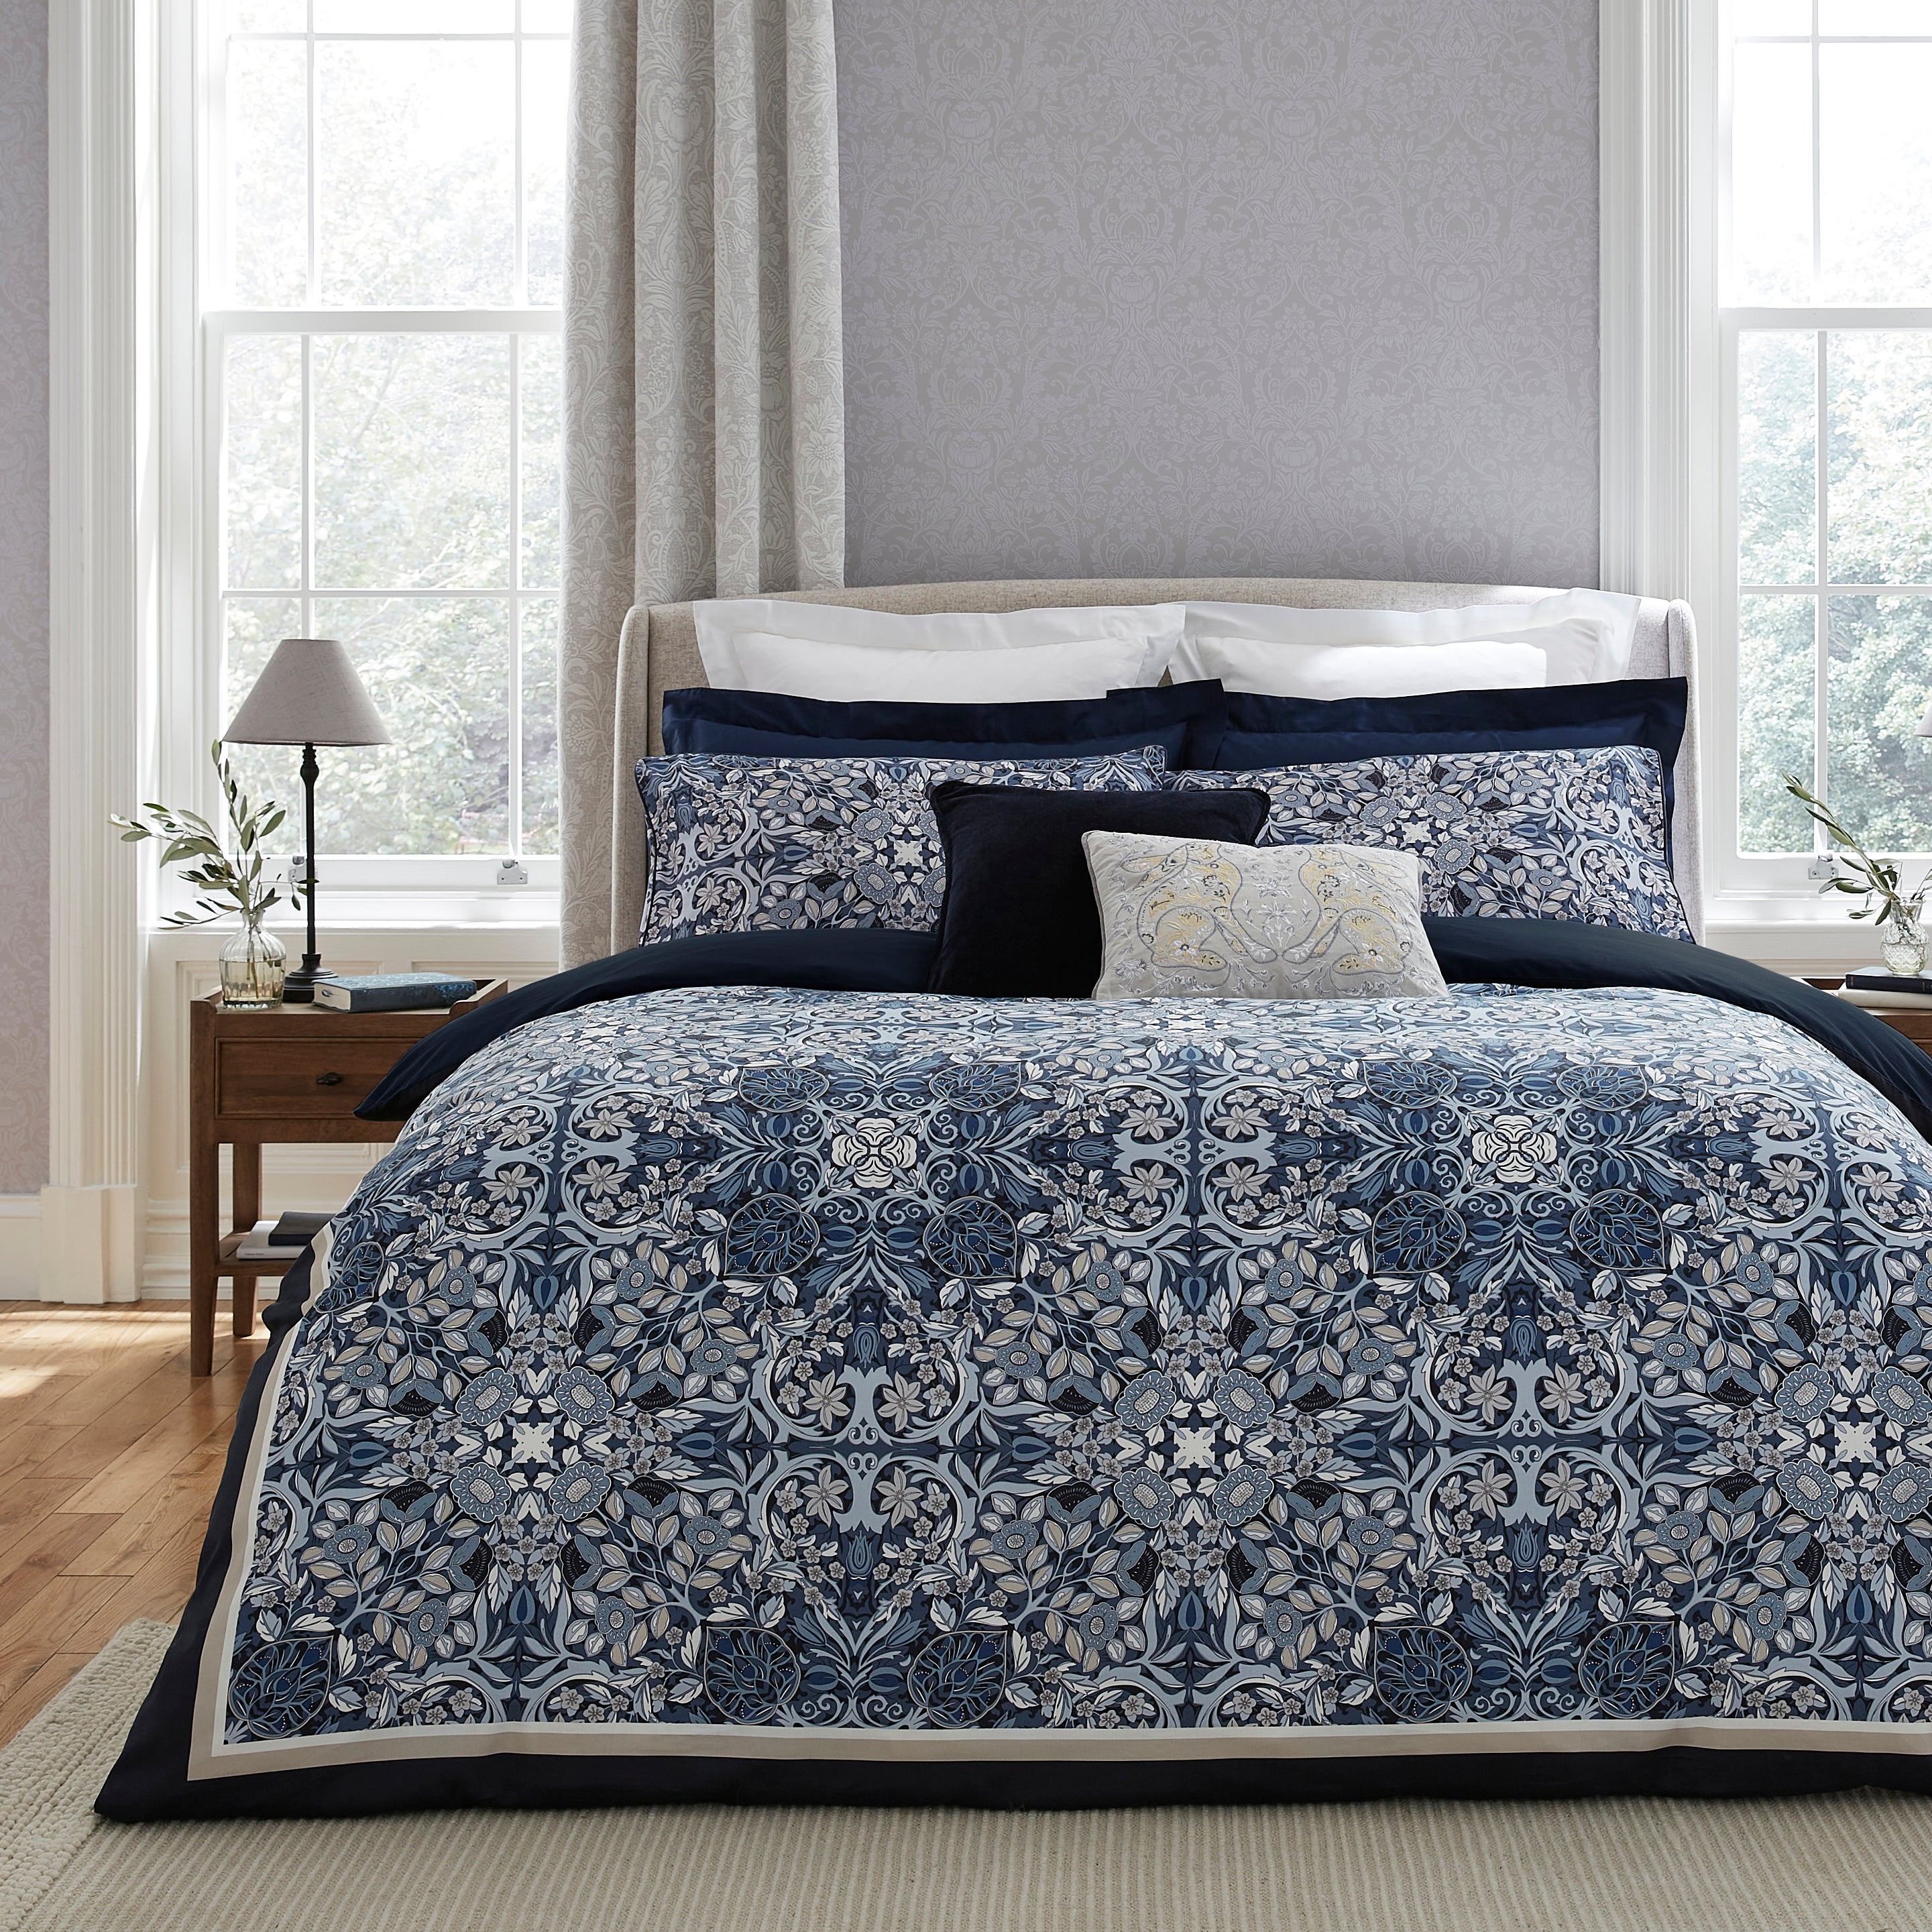 Dorma Kaleidoscope Navy Cotton Sateen Duvet Cover and Pillowcase Set Navy Blue/White